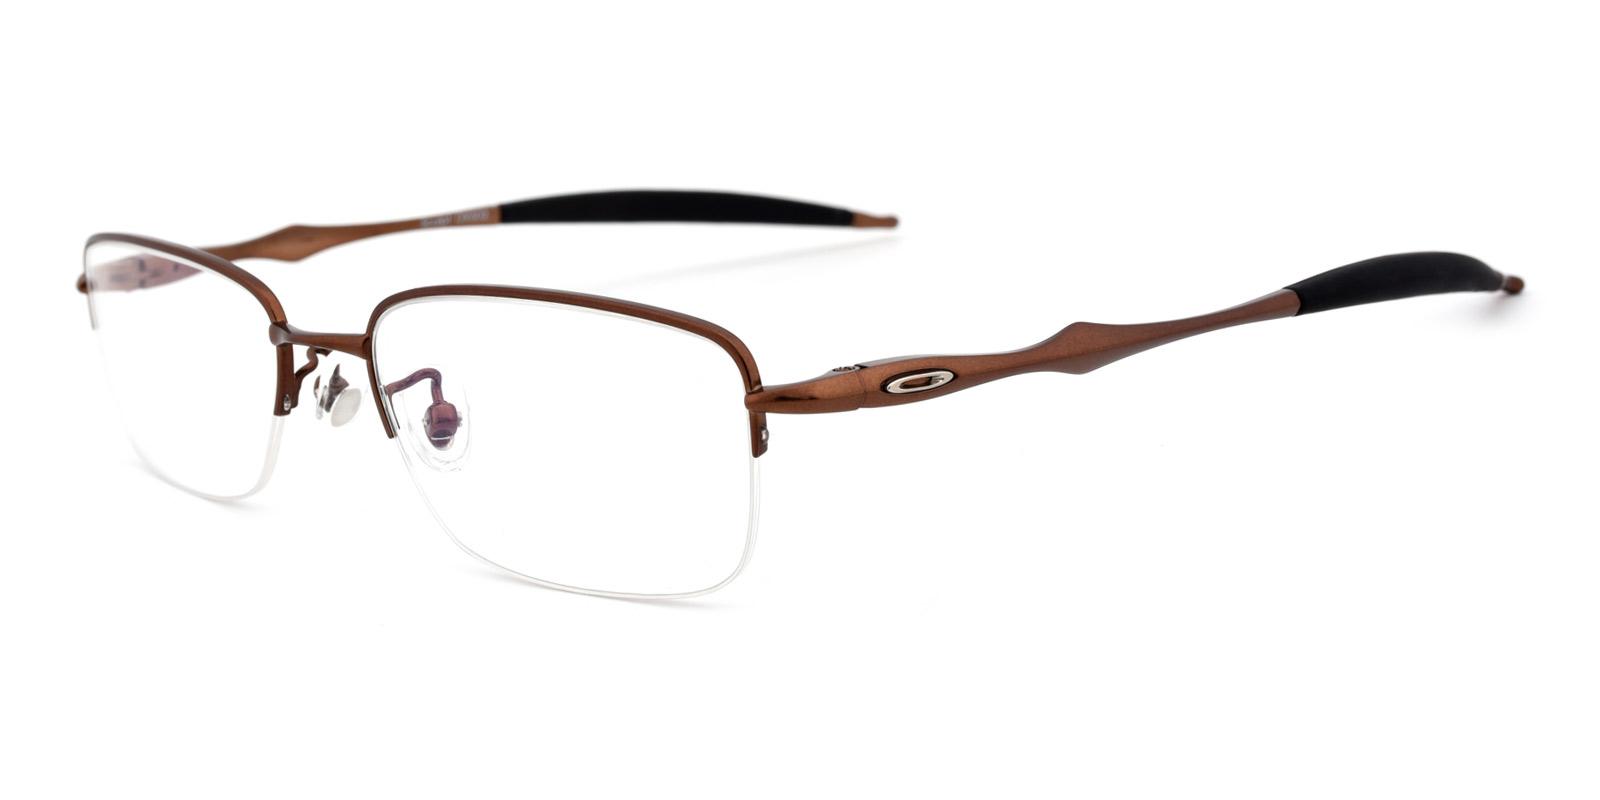 Sean-Brown-Rectangle-Titanium-Eyeglasses-detail